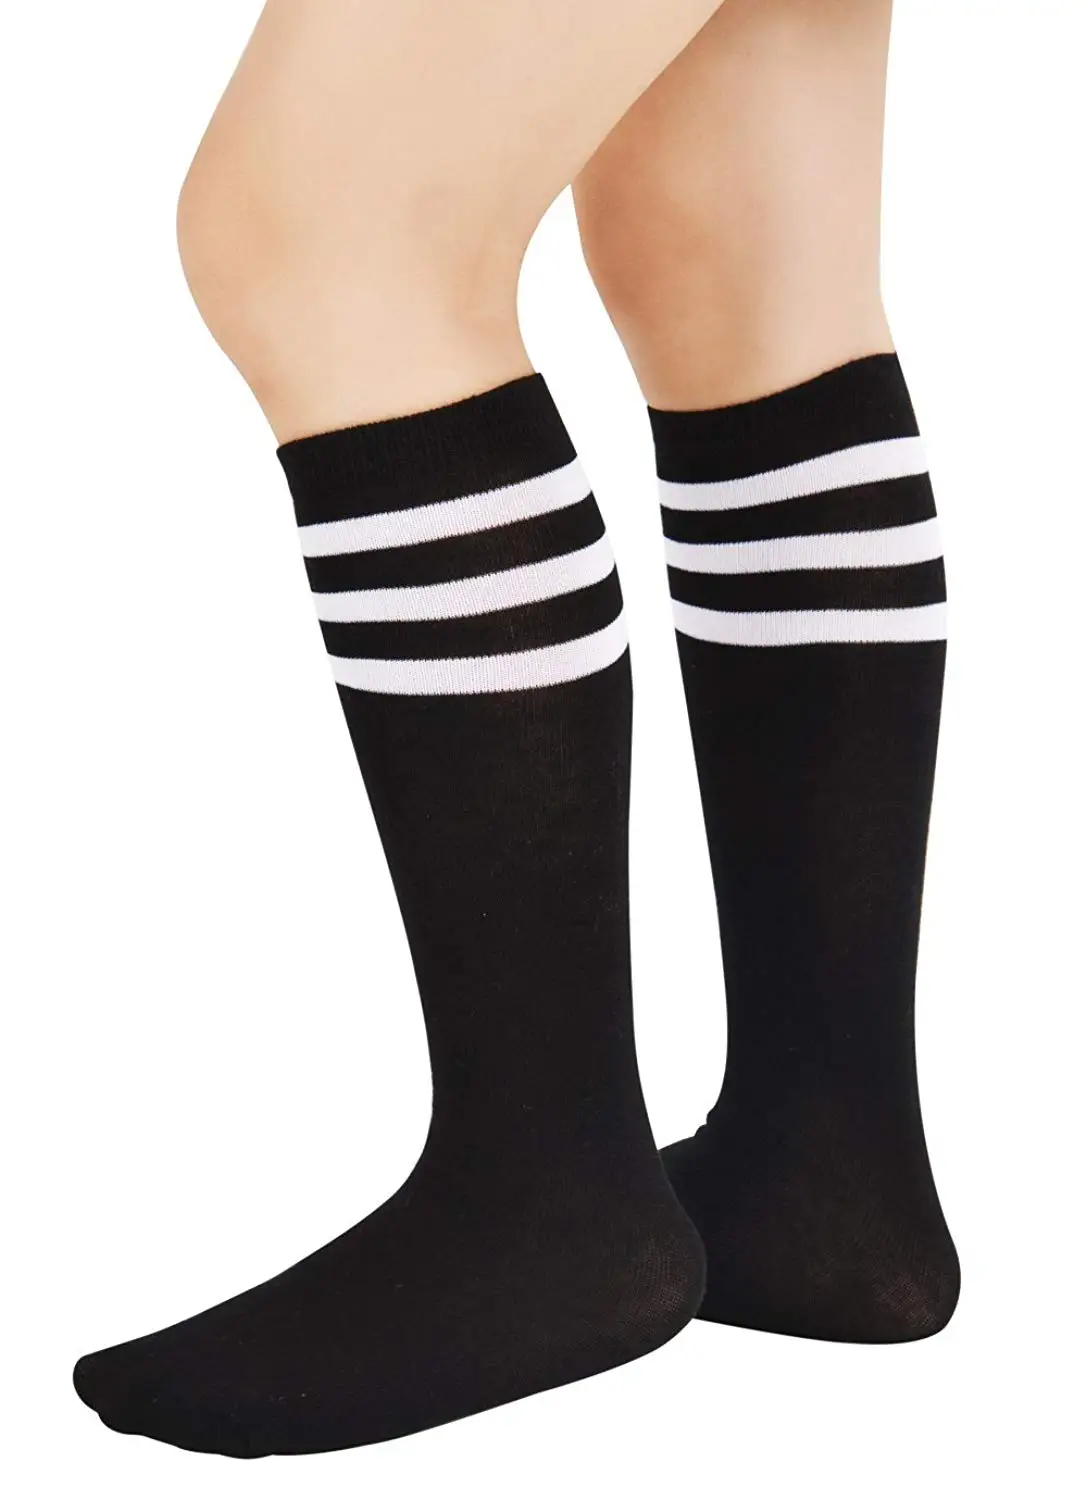 Cheap Black Knee High Socks With White Stripes, find Black Knee High ...